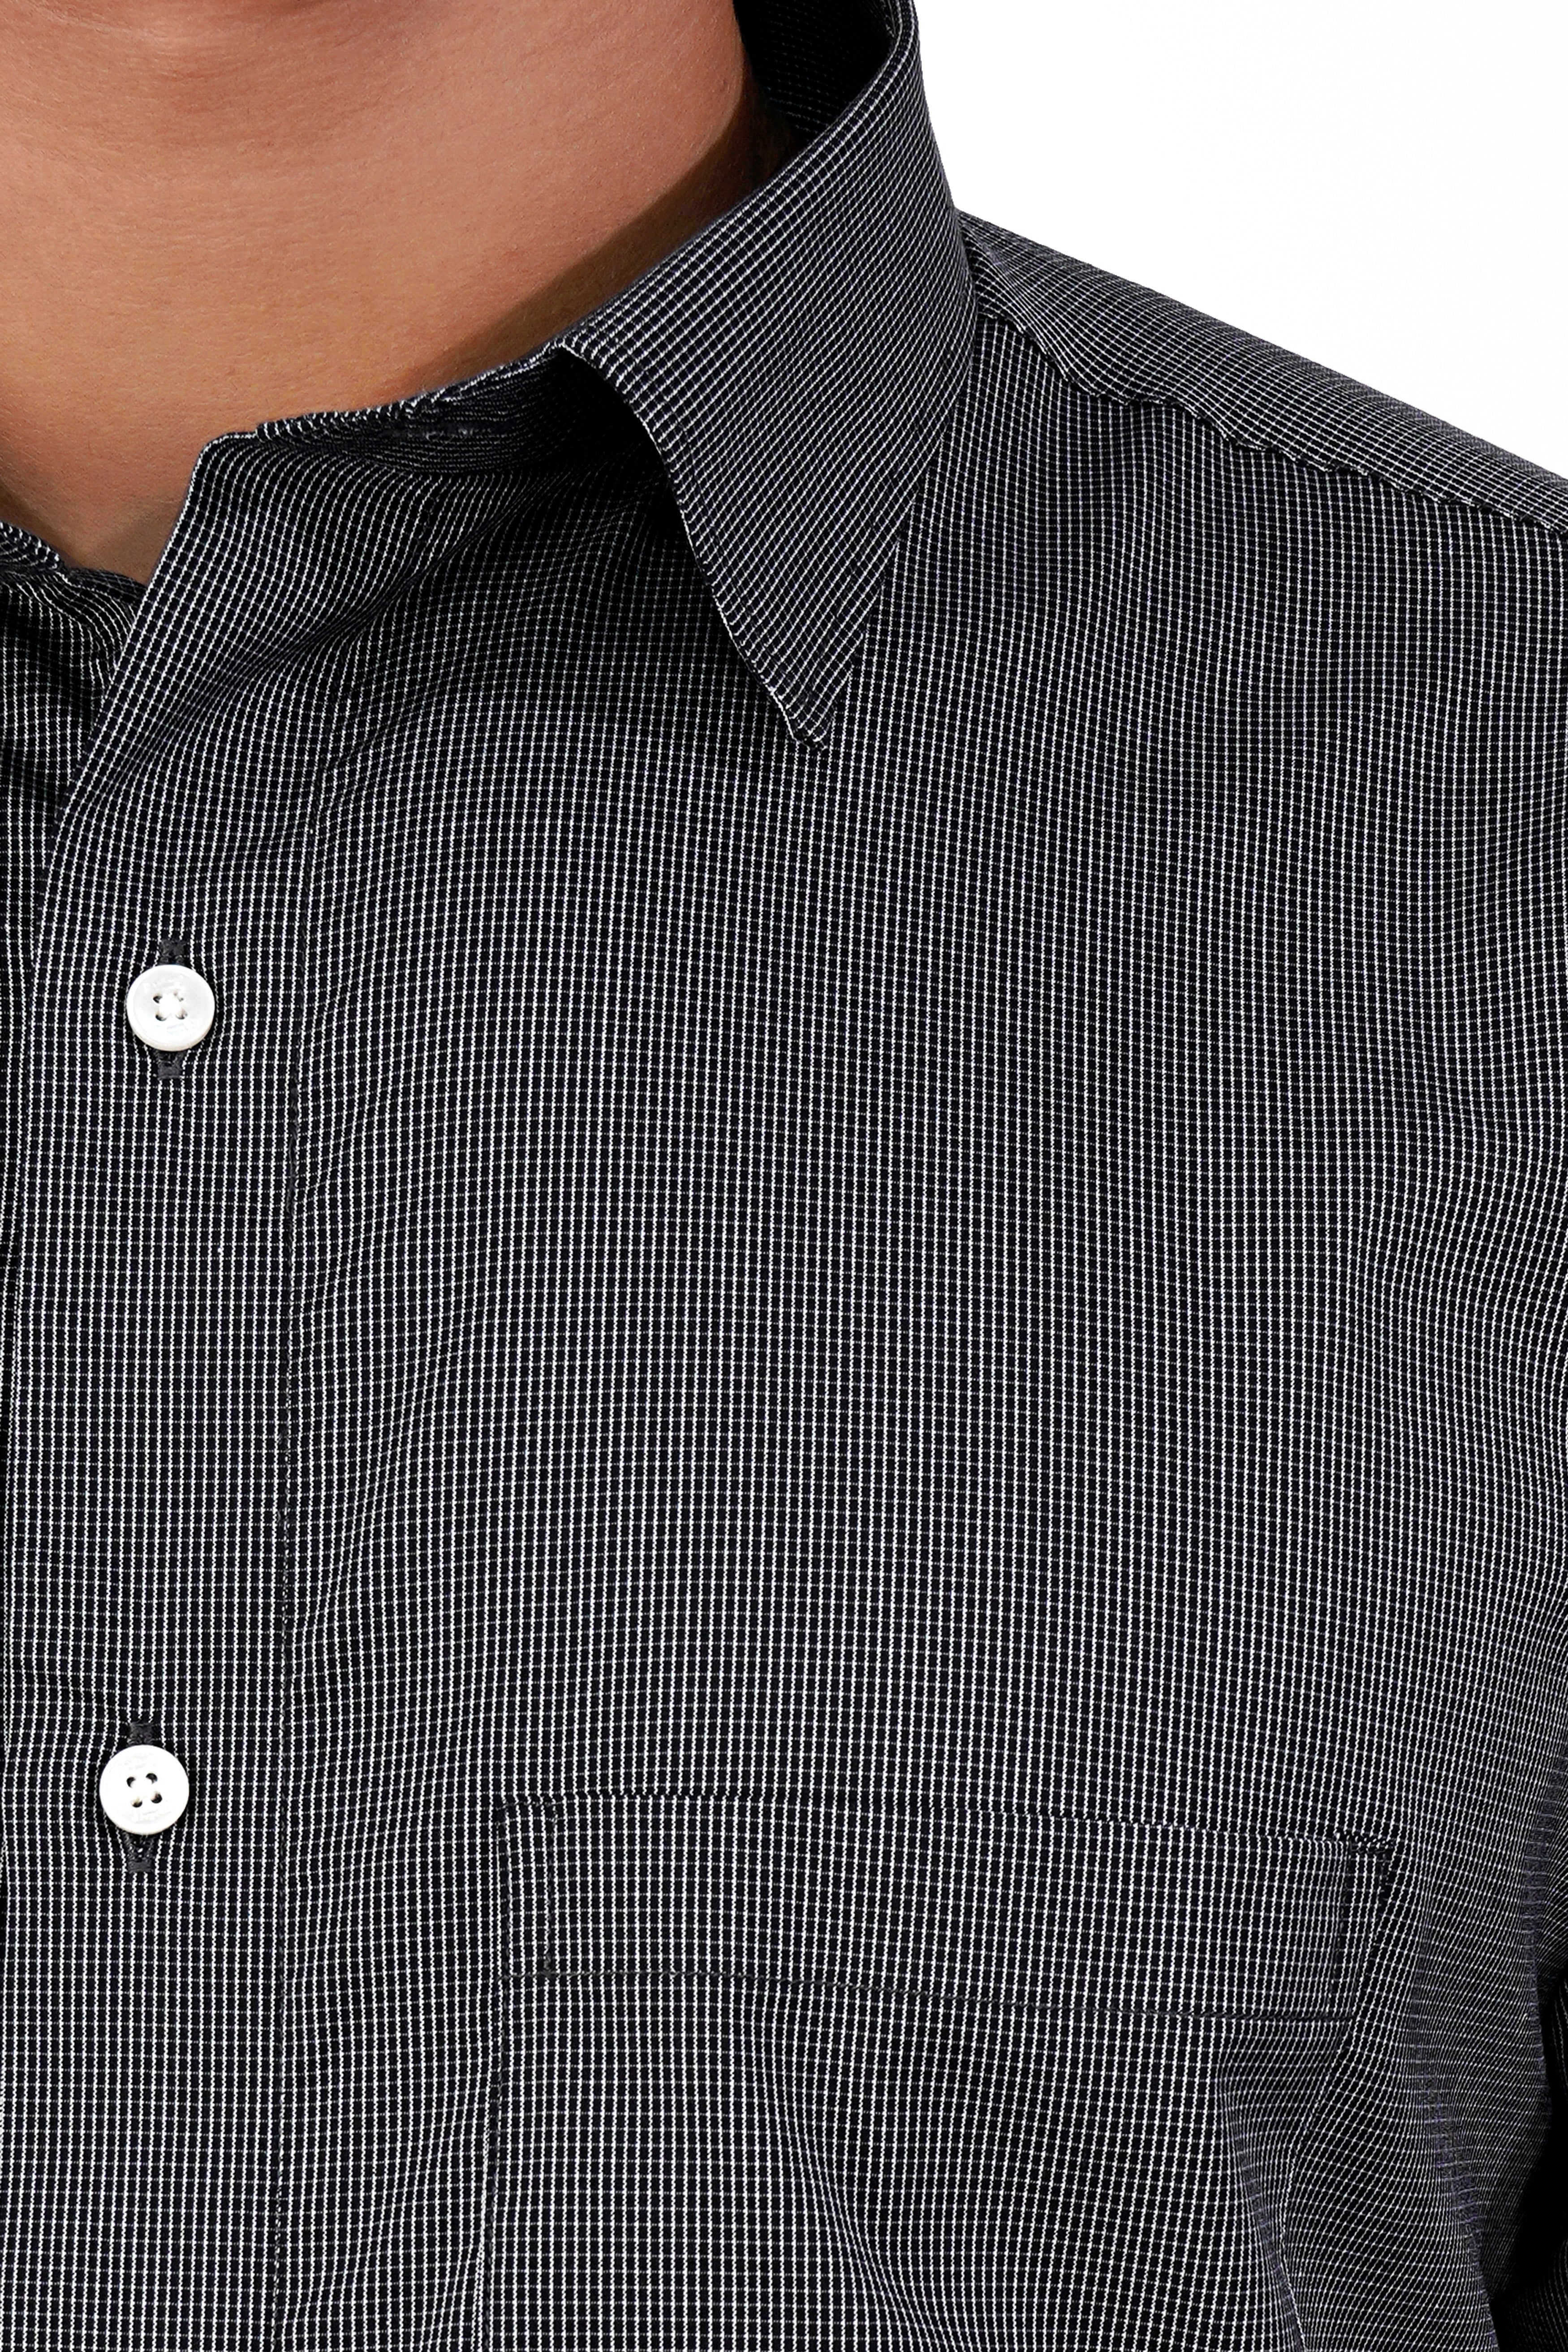 Jade Black and White Checkered Premium Giza Cotton Shirt